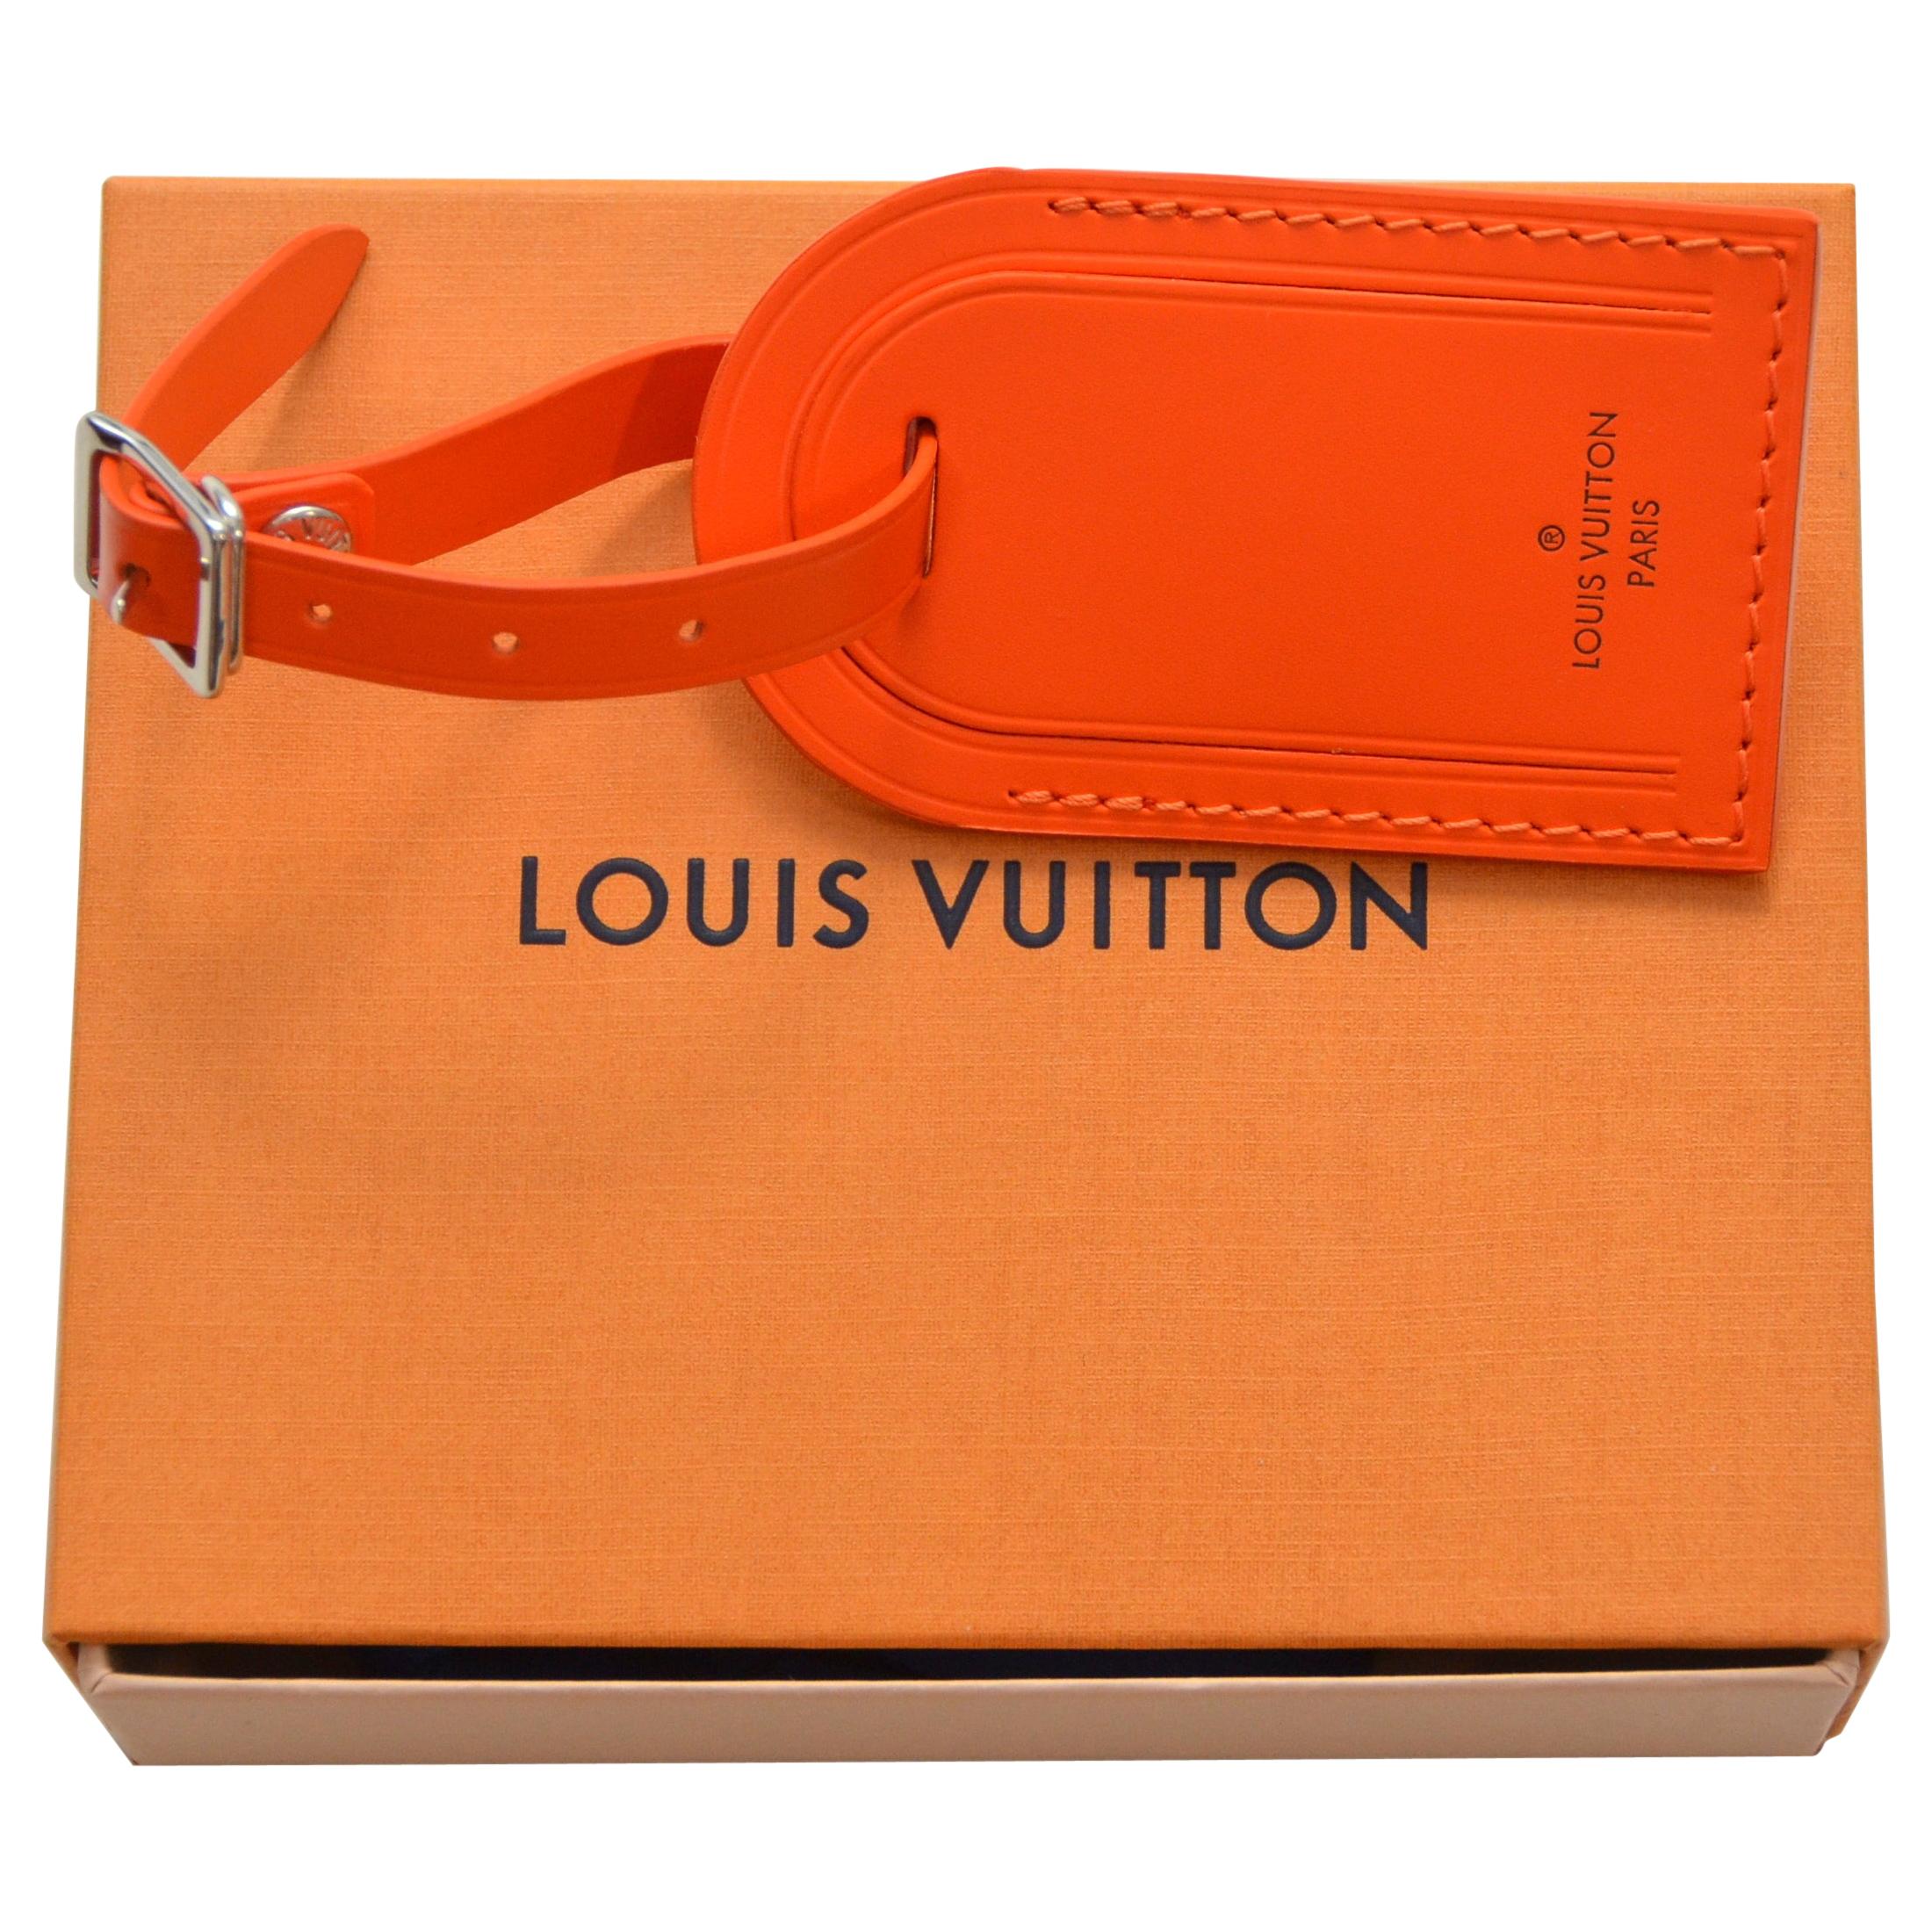 Sell Louis Vuitton Handbags In Orange County - Immediate Cash